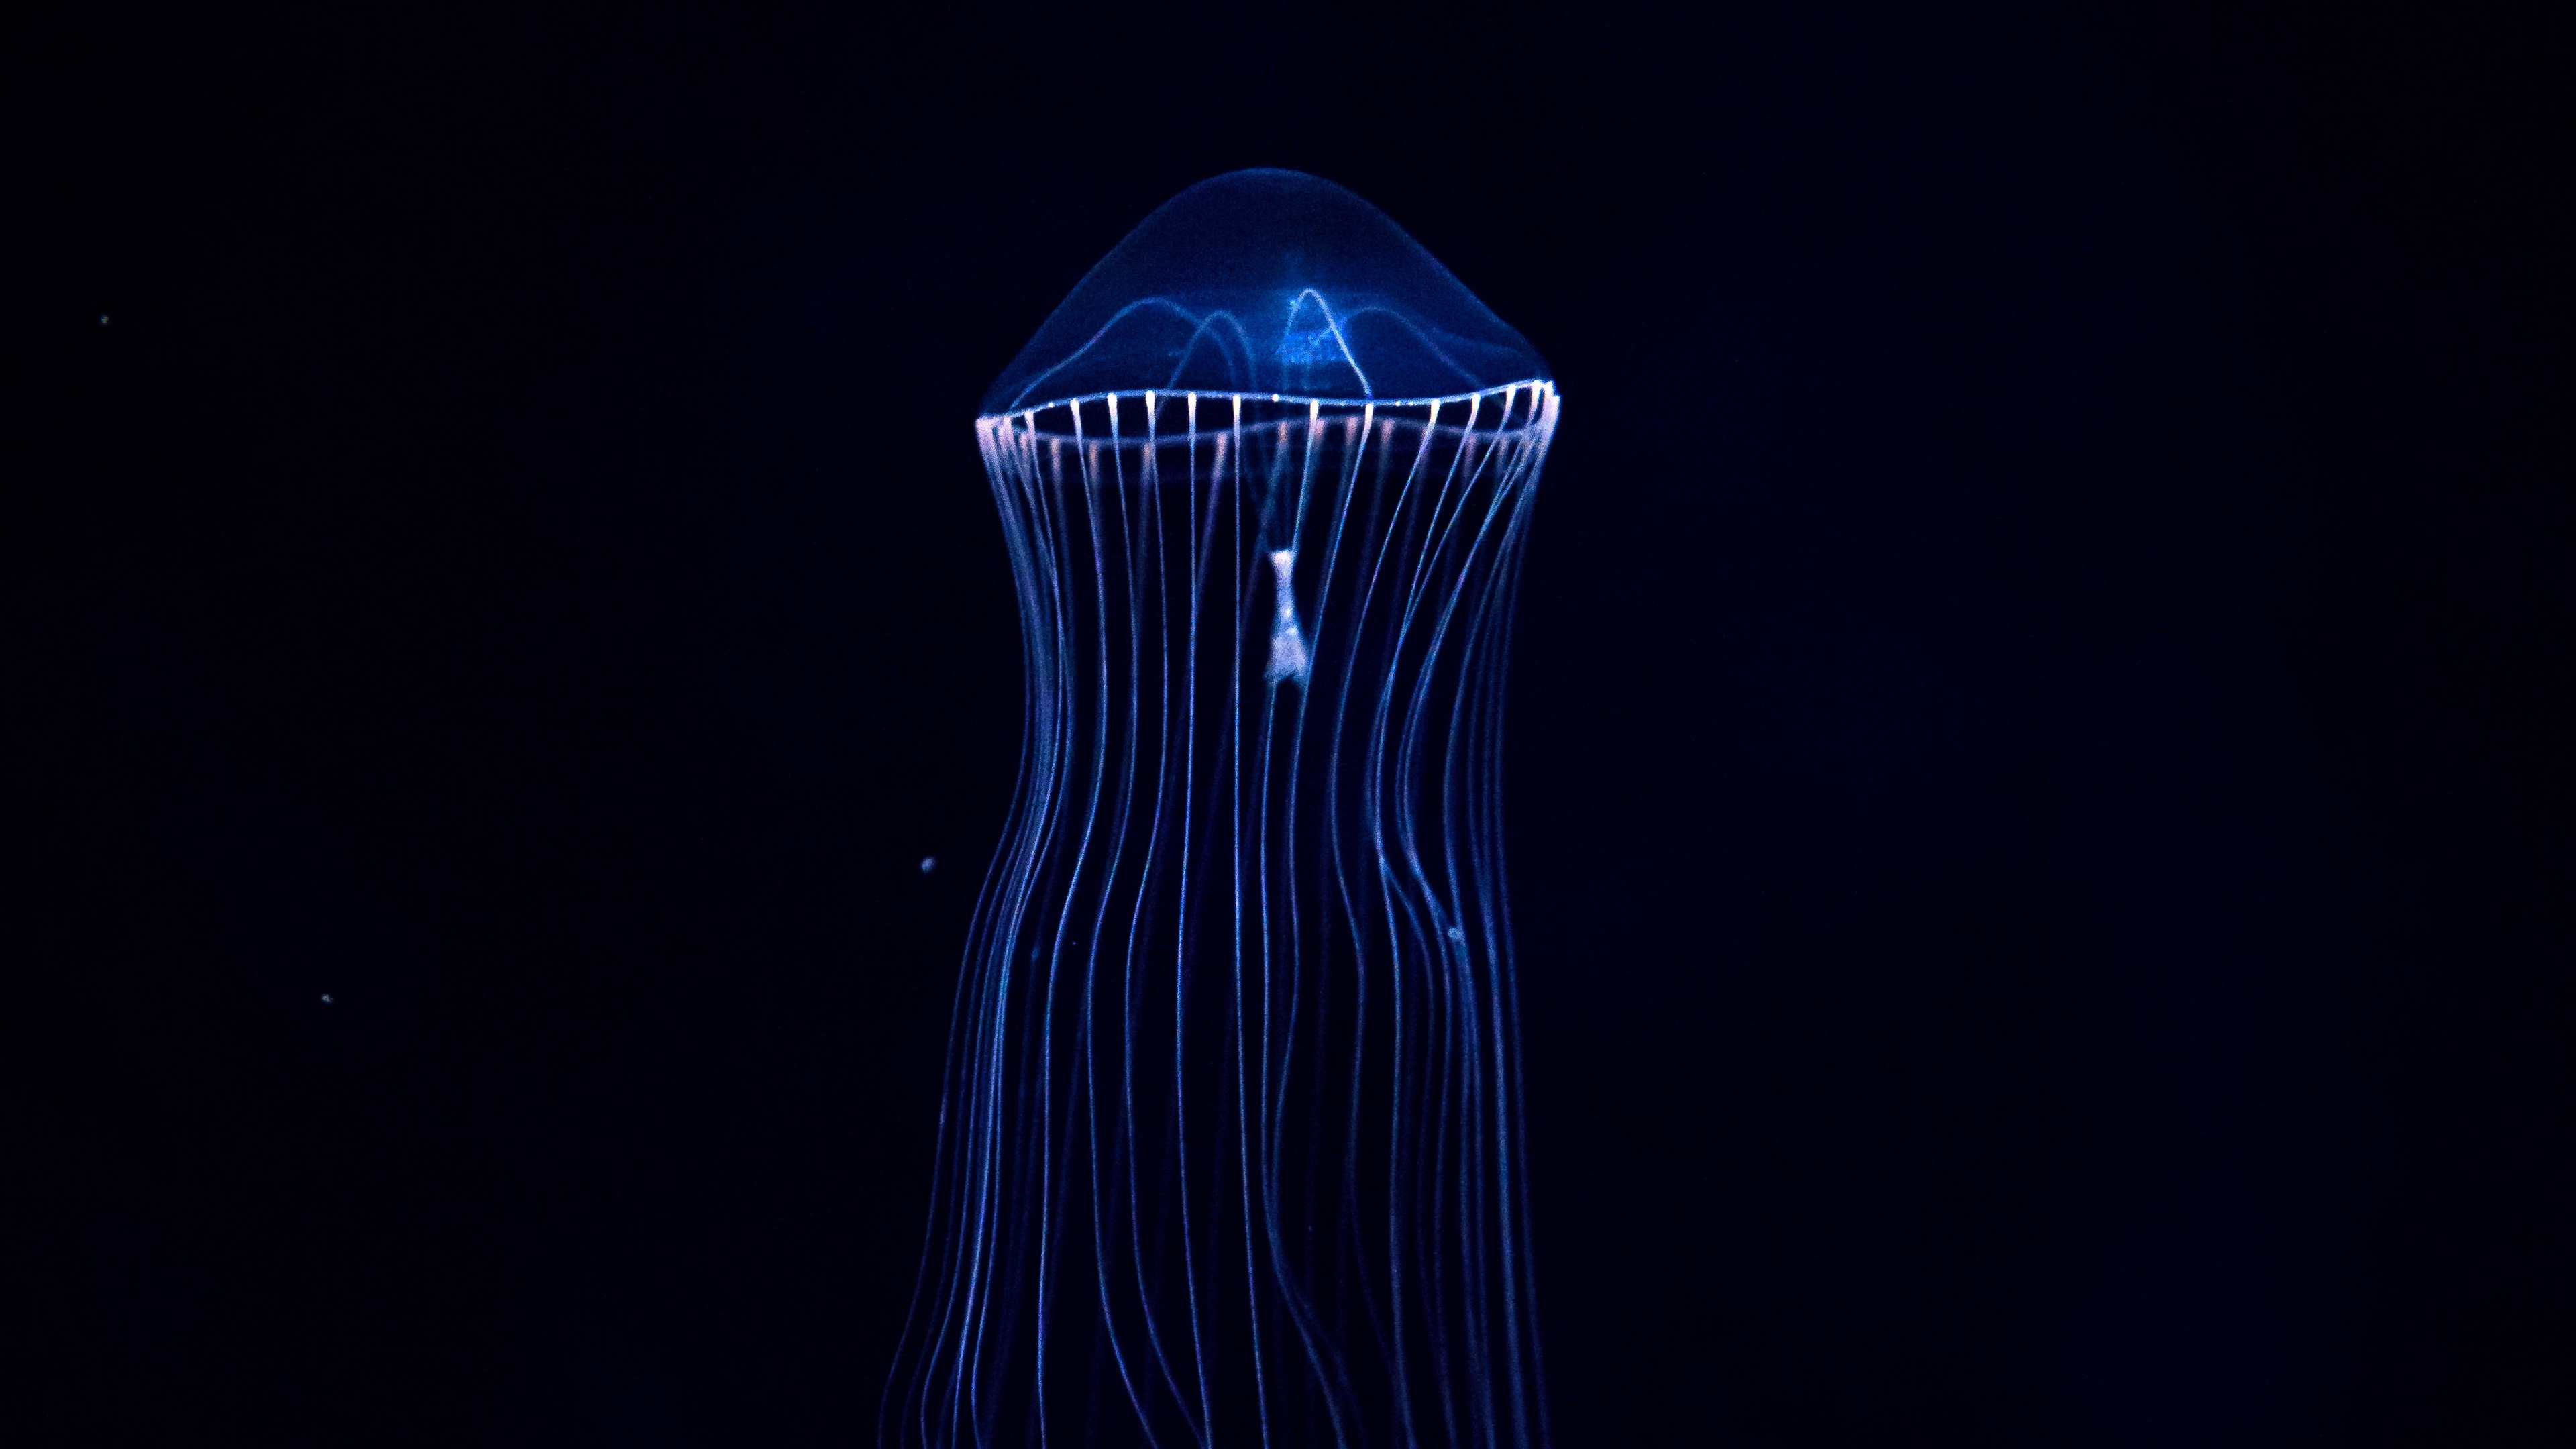 jellyfish underwater world dark tentacles 4k 1540575366 - jellyfish, underwater world, dark, tentacles 4k - underwater world, Jellyfish, Dark